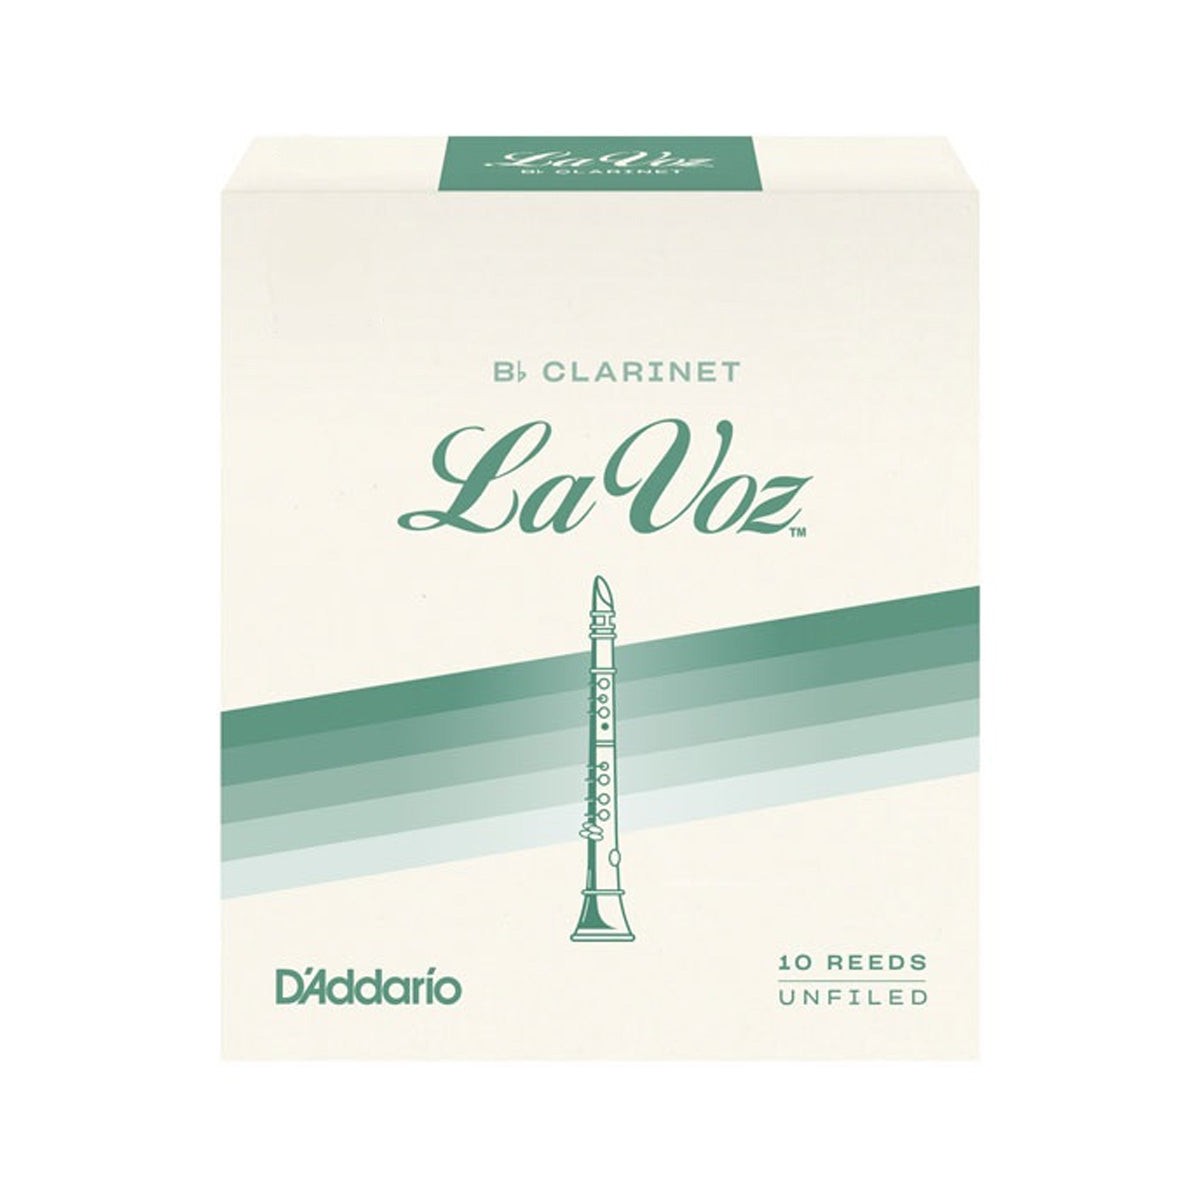 D'Addario RCC10MH La Voz Bb Clarinet Medium Hard Reed - Per Box